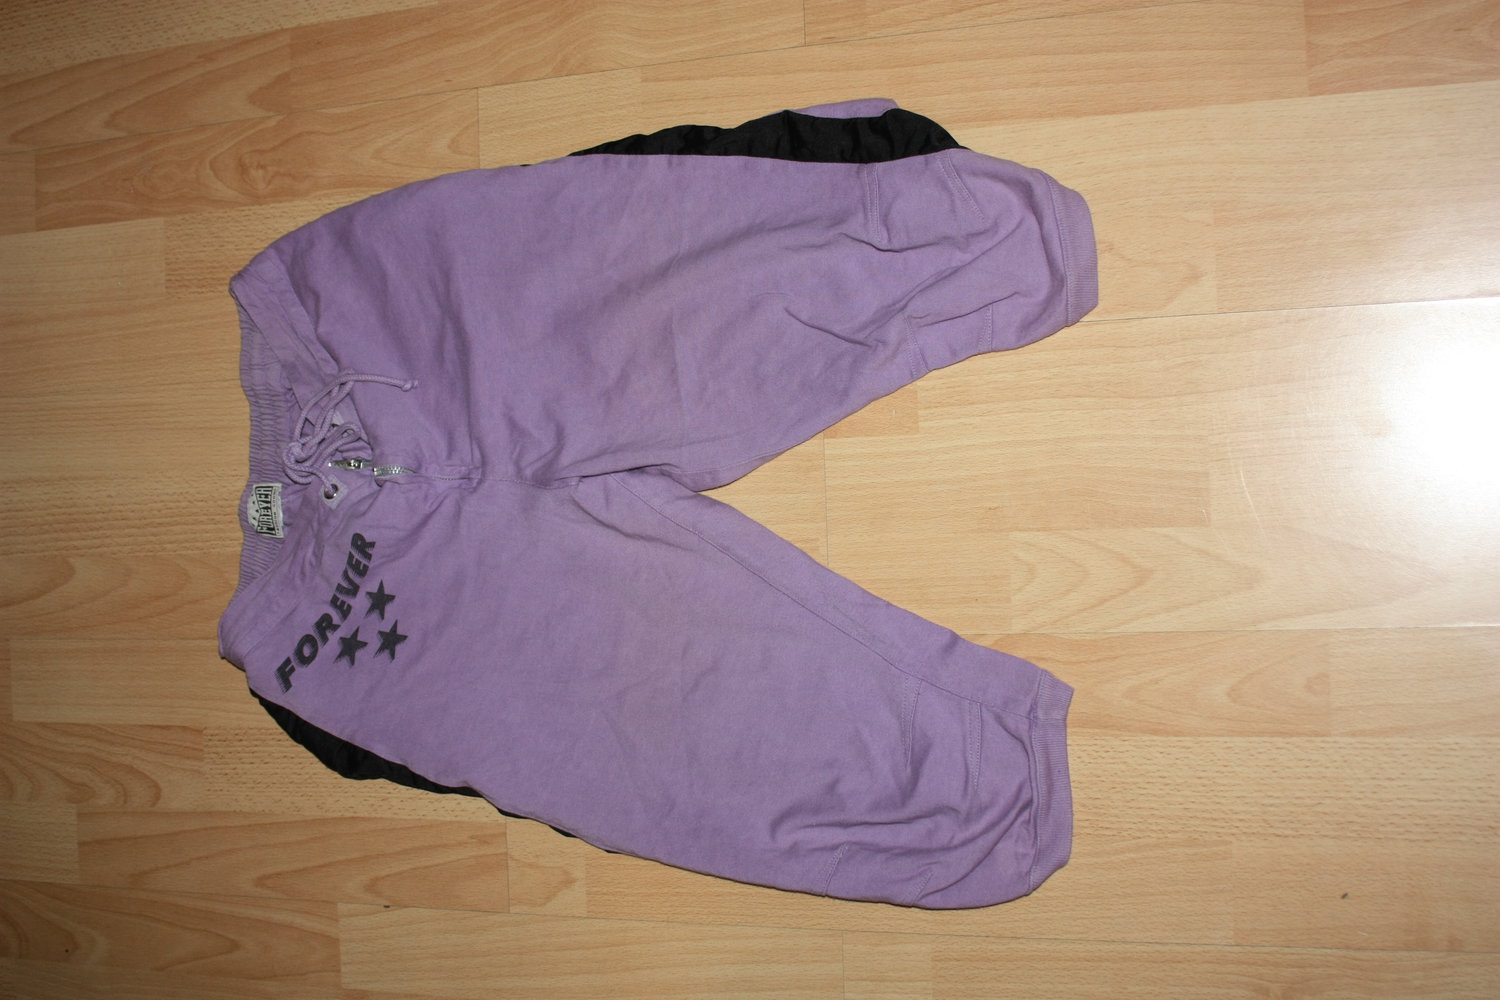 Schwarz lila Sporthose, 7/8 Bein, Gr. S, 100% Baumwolle